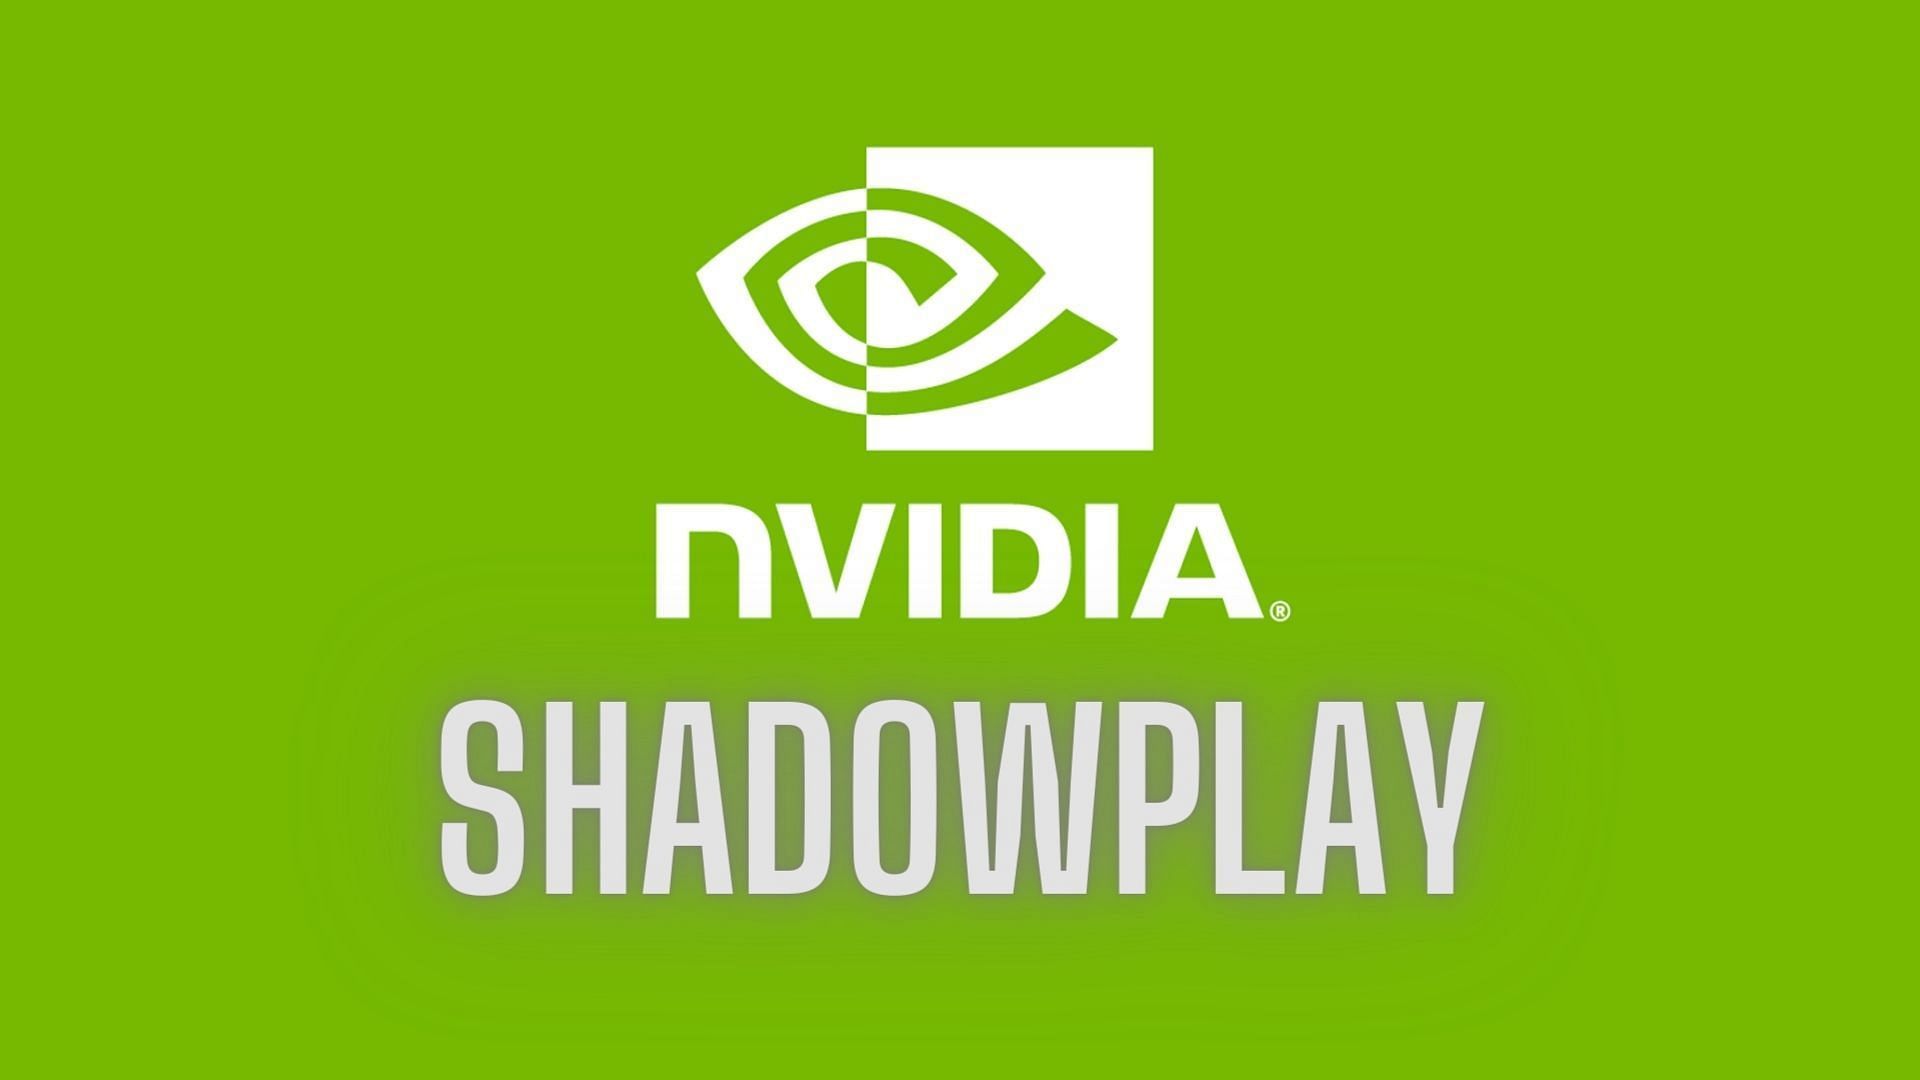 ShadowPlay was an ingenious move from Nvidia (Image via Nvidia)